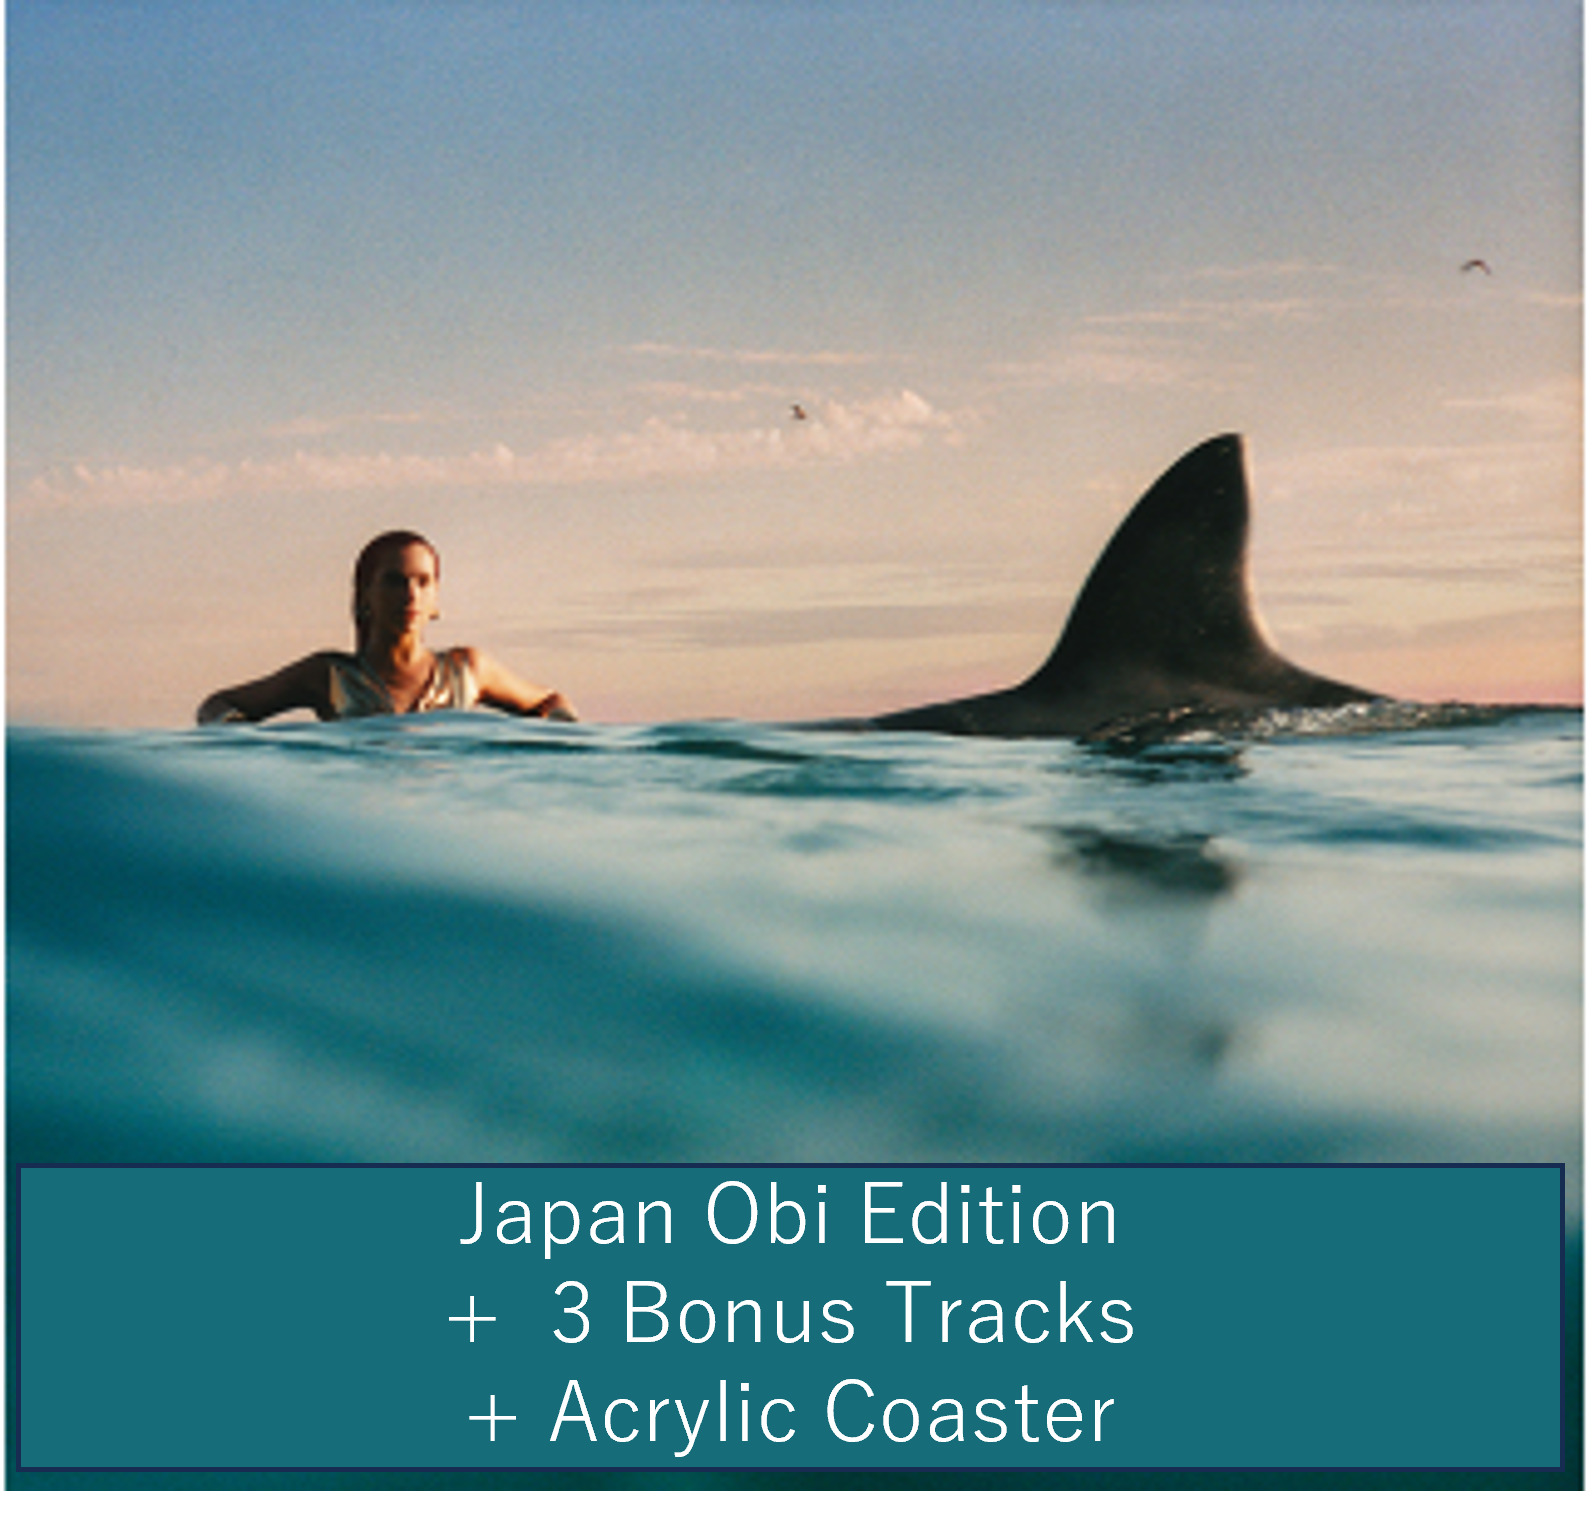 DUA LIPA RADICAL OPTIMISM CD JAPAN Obi 3 Bonus Tracks + Acrylic Coas + PRE-ORDER